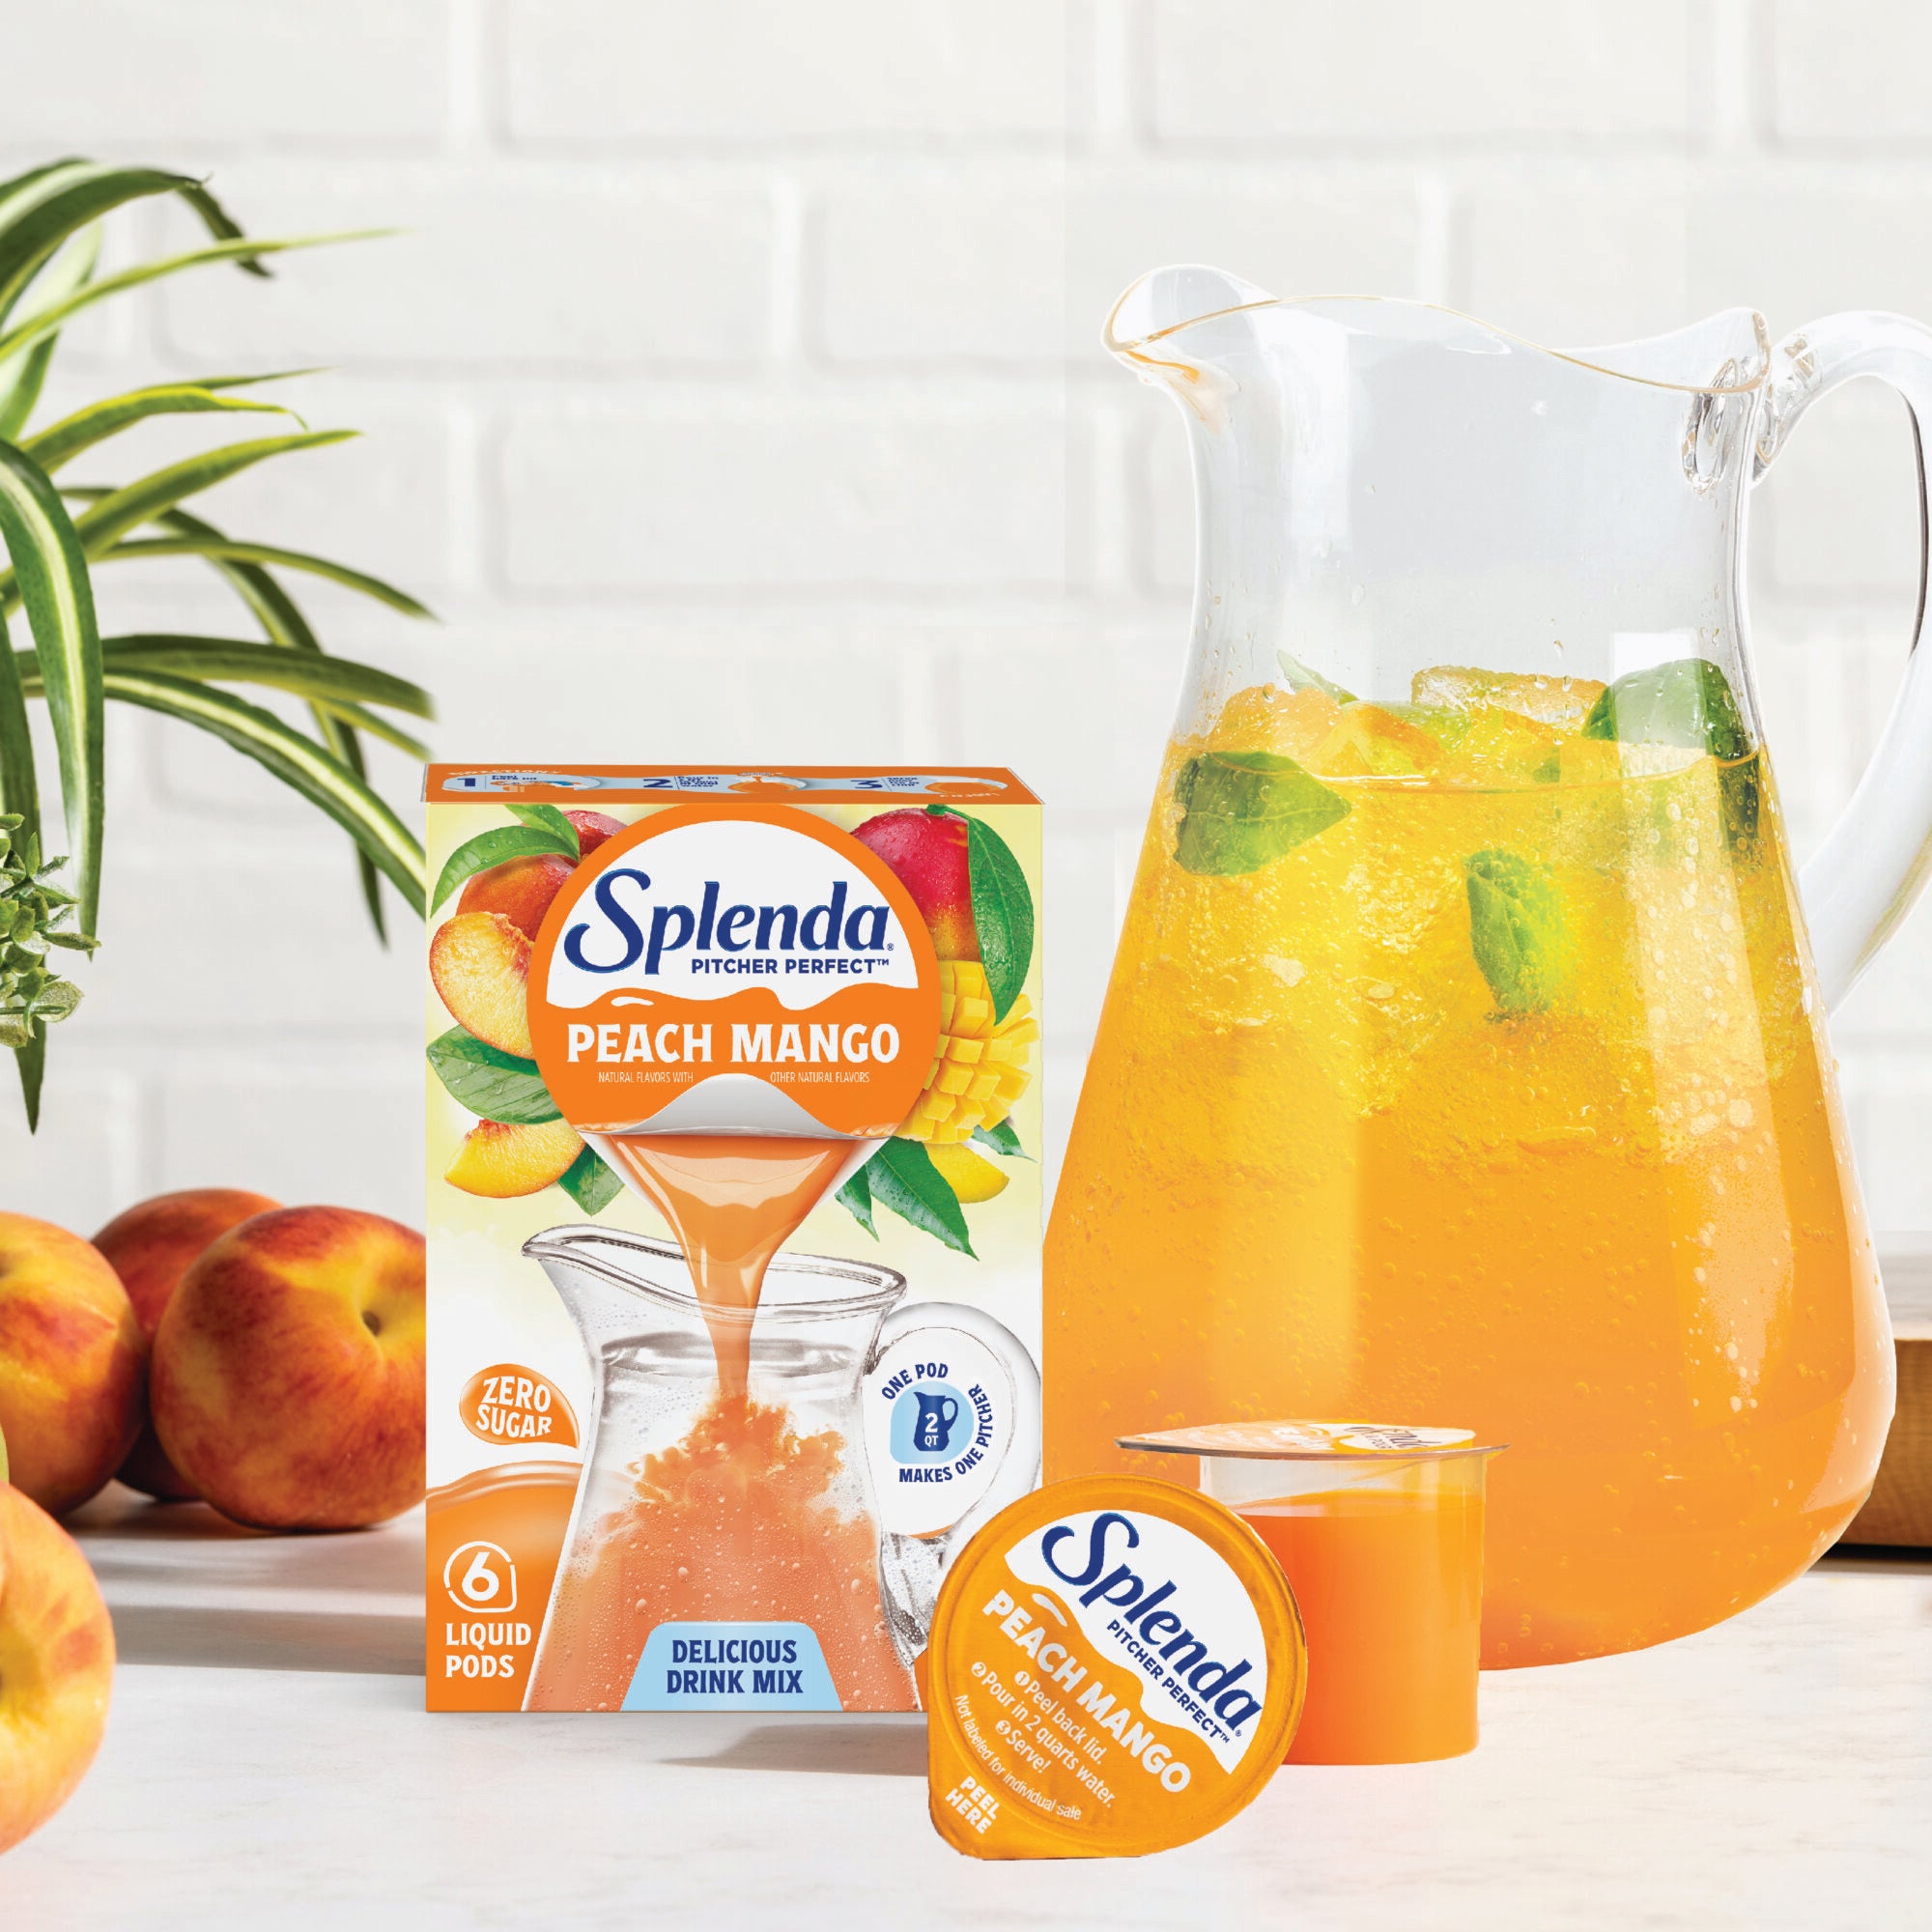 Splenda Pitcher Perfect Peach Mango Zero Sugar Drink Mix – Pitcher & Glass